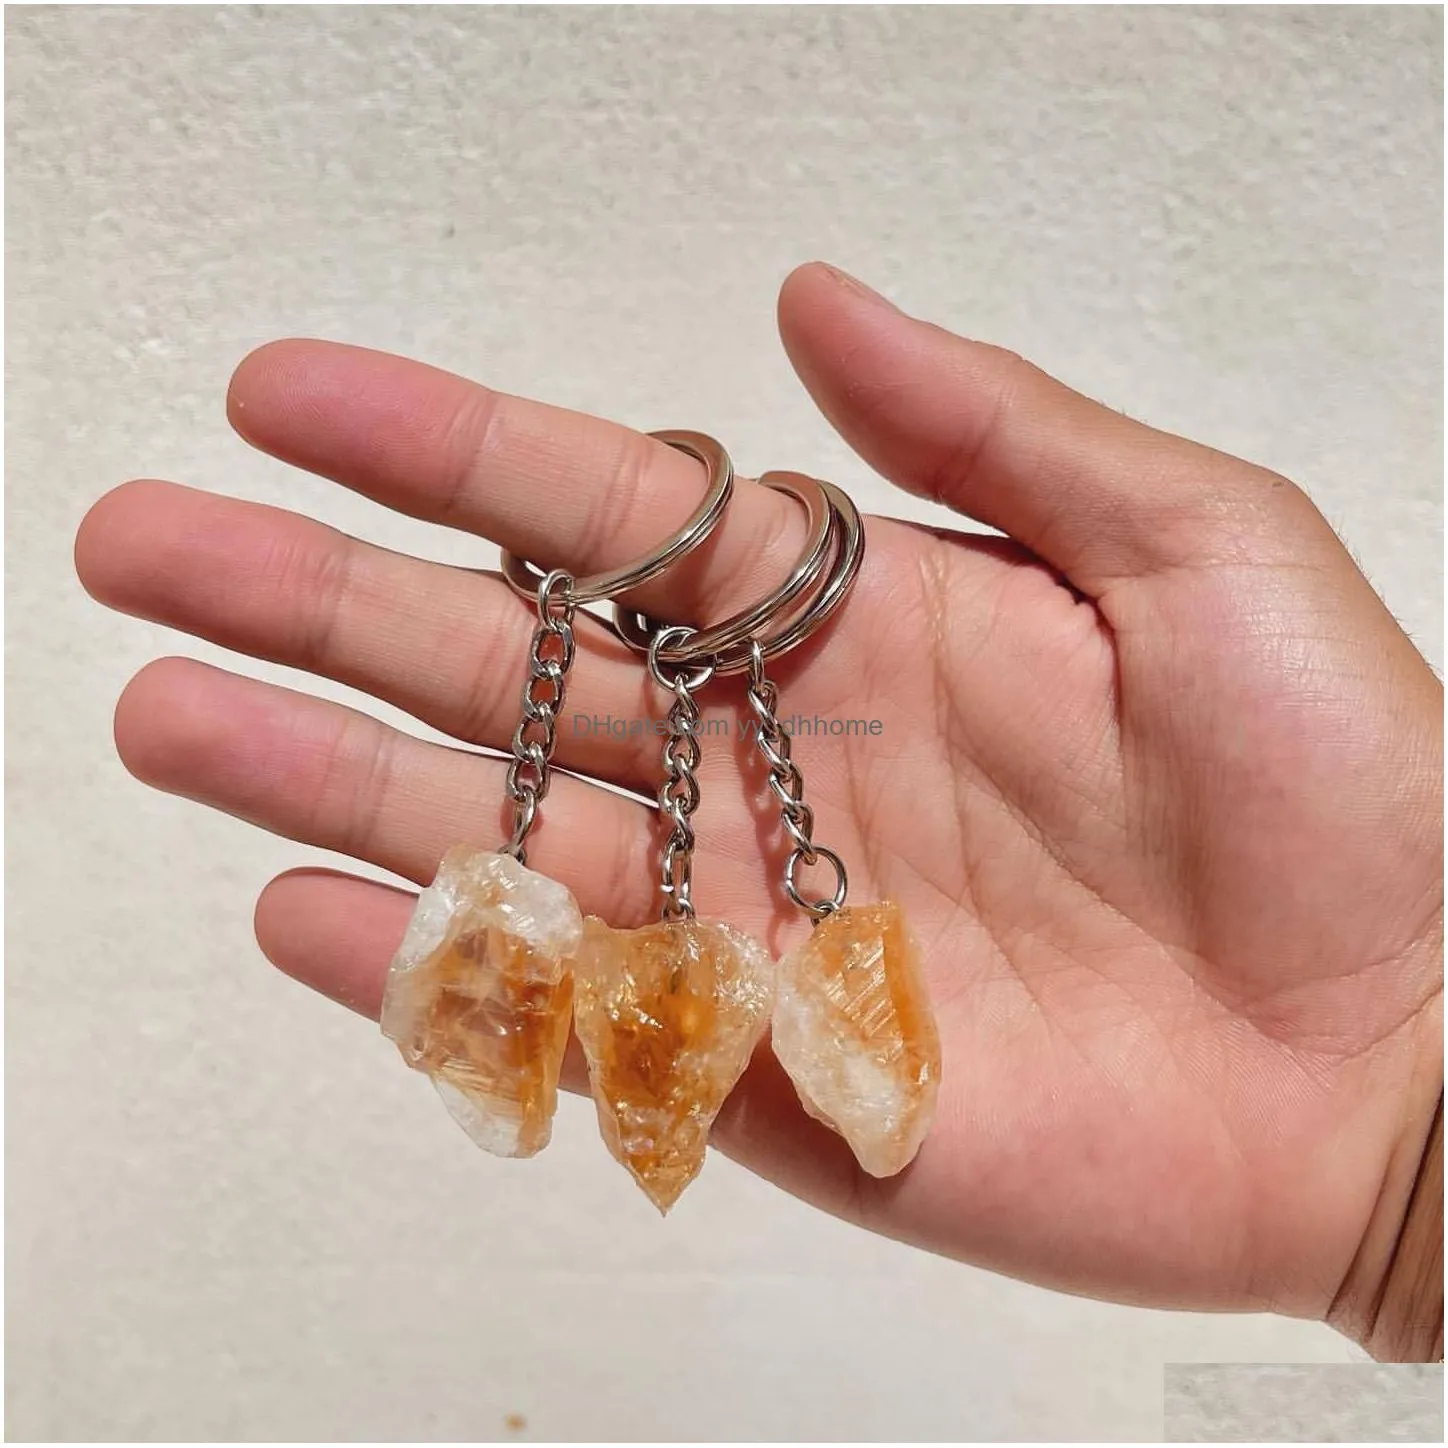 natural raw ore key chain ring gem quartz citrine amethyst irregular stone keyring keychian diy jewelry making accessorie